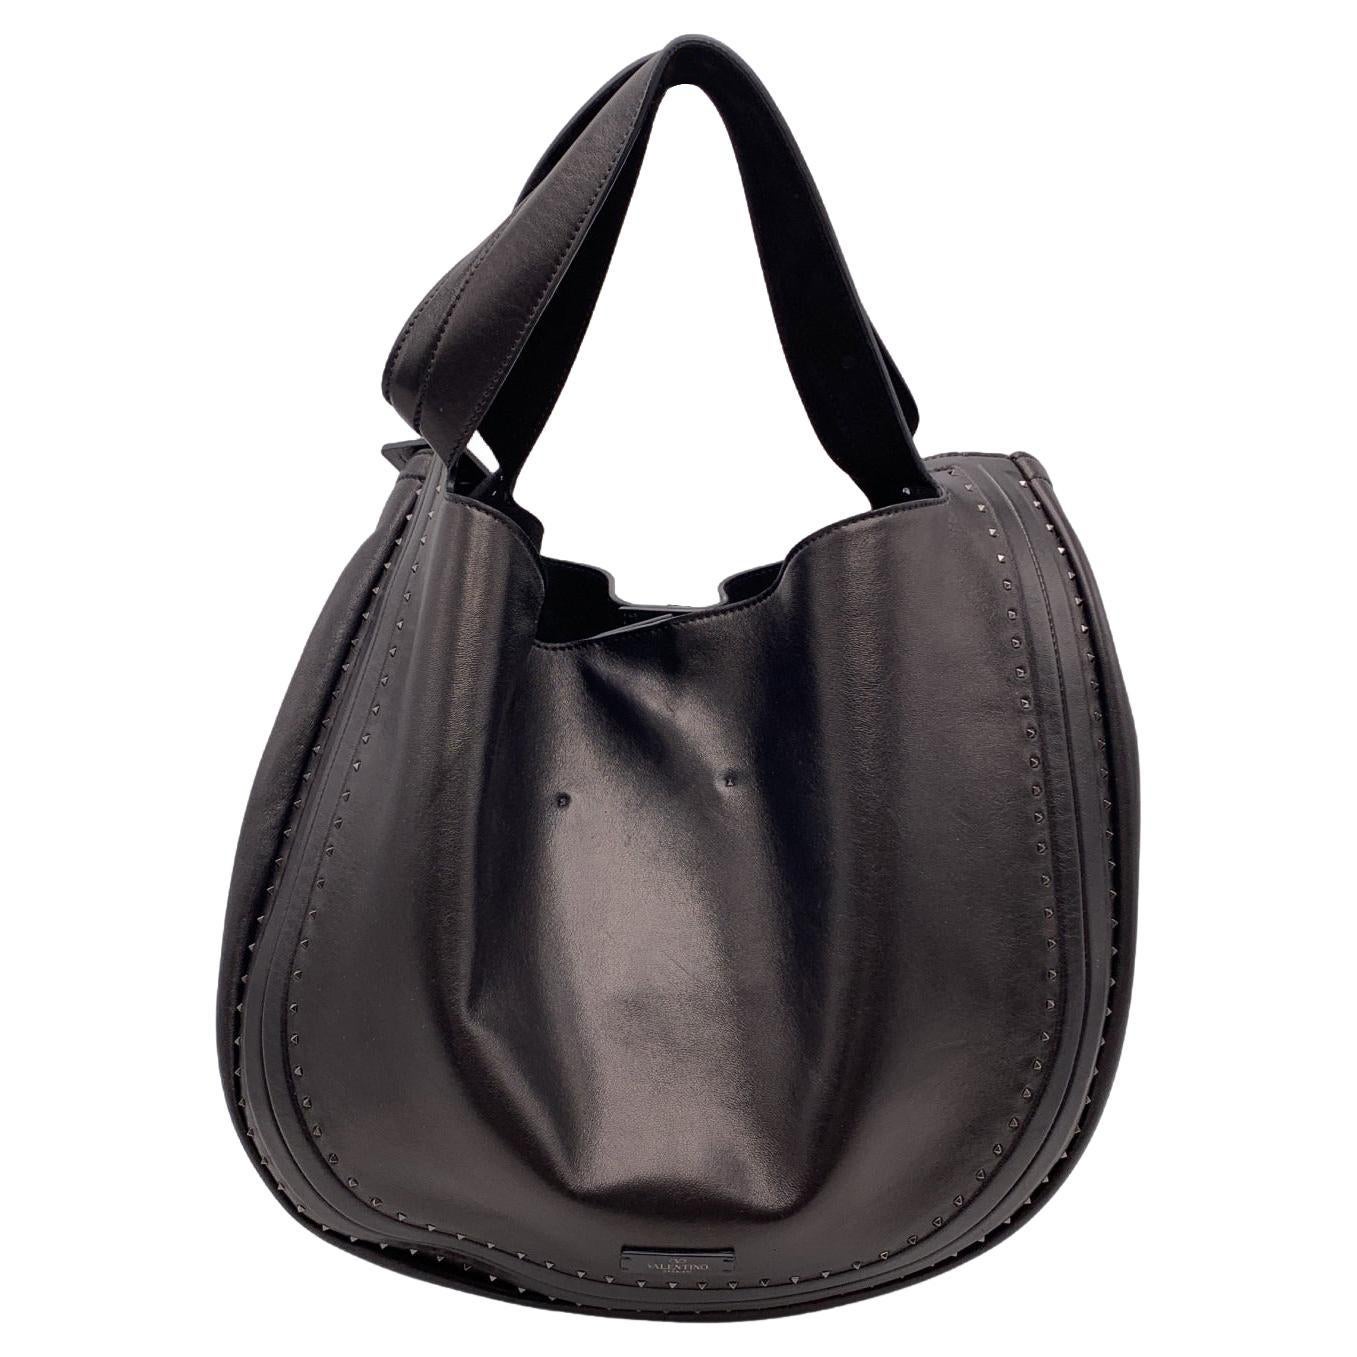 Valentino Garavani Black Leather Studded Slouchy Style Tote Bag